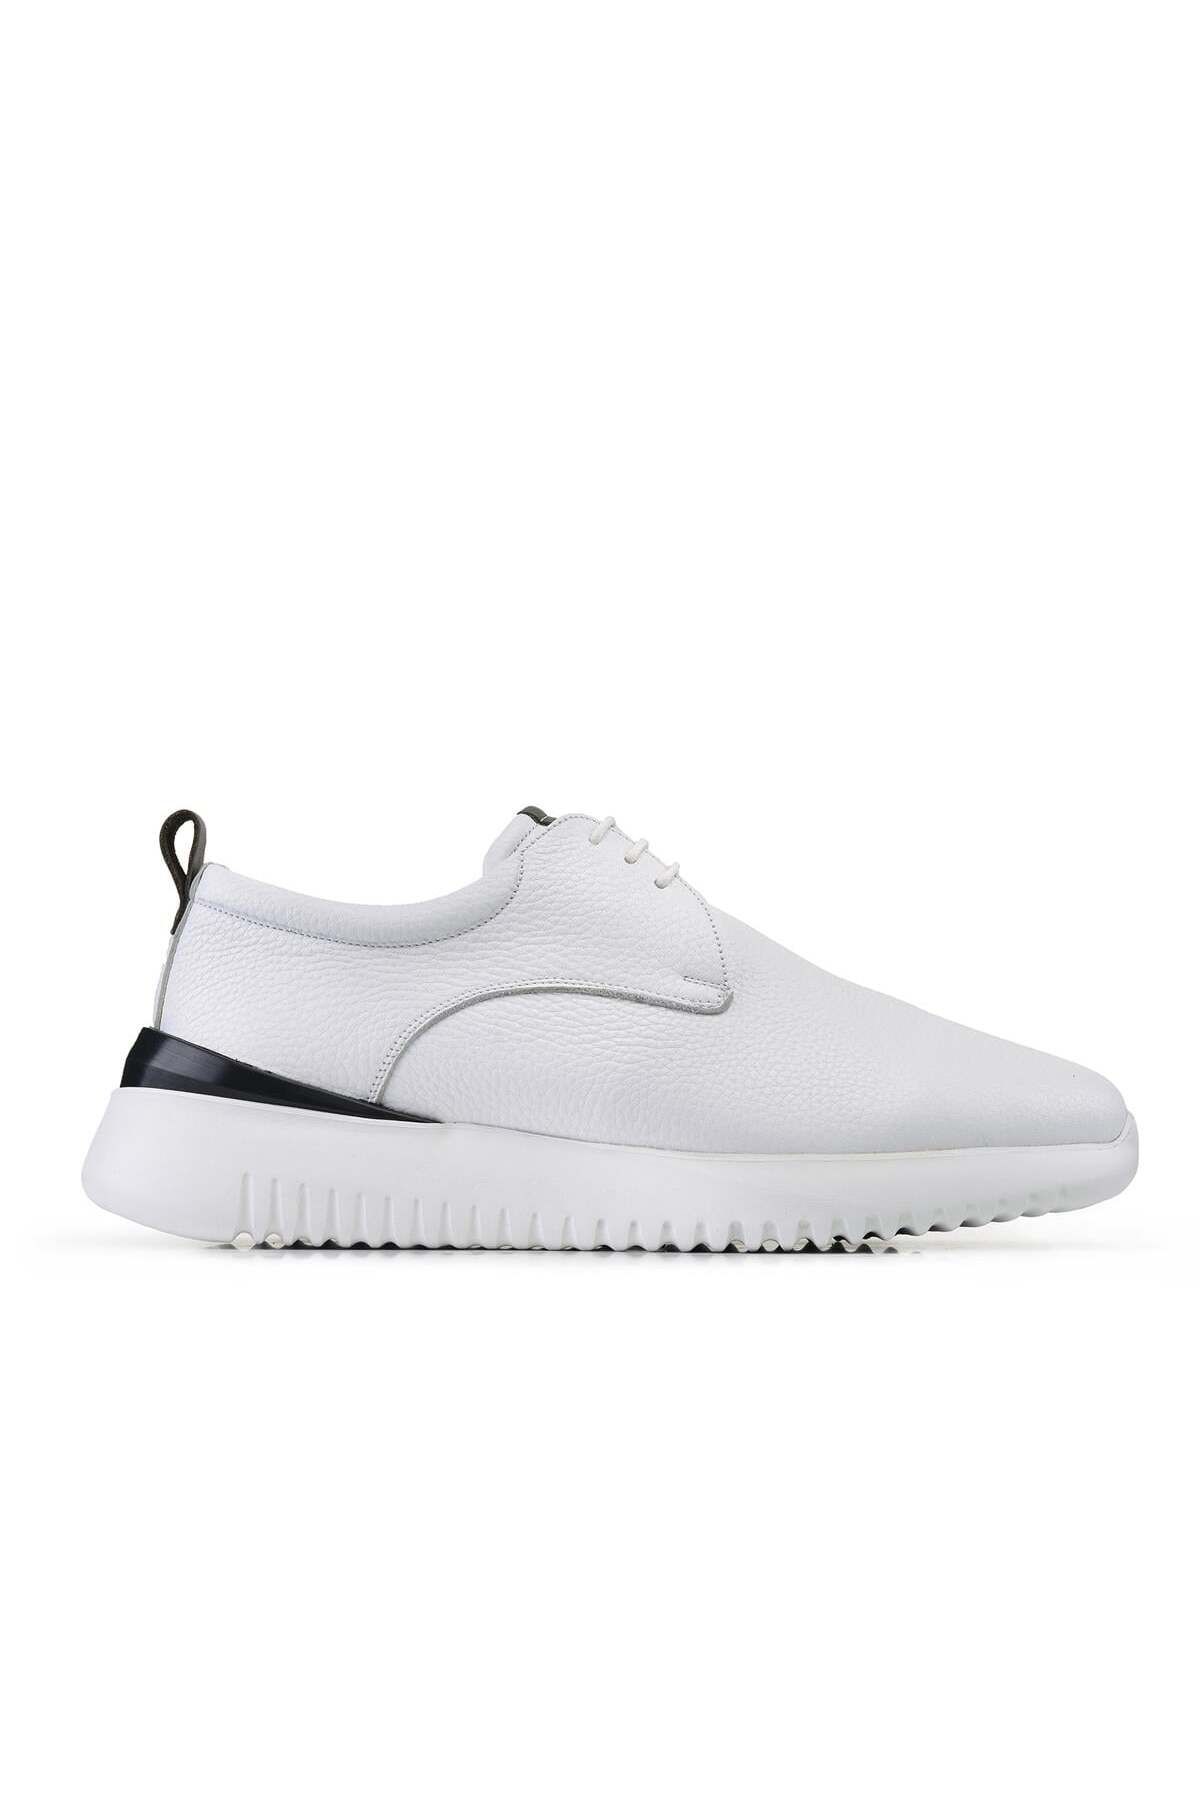 Nevzat Onay Beyaz Sneaker -33171-